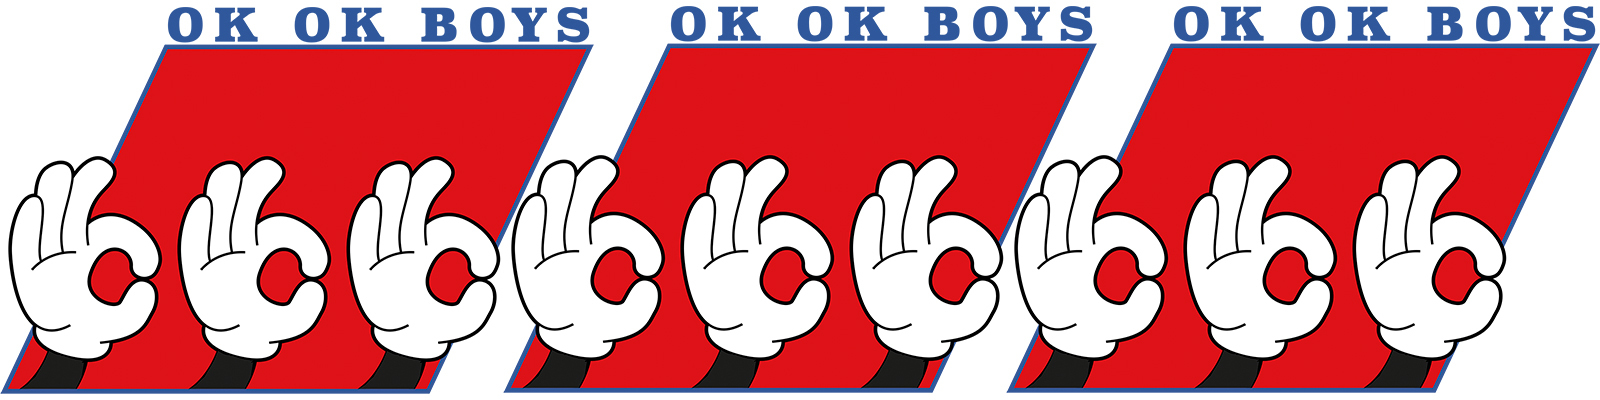 OK OK Boys - en musikpodcast